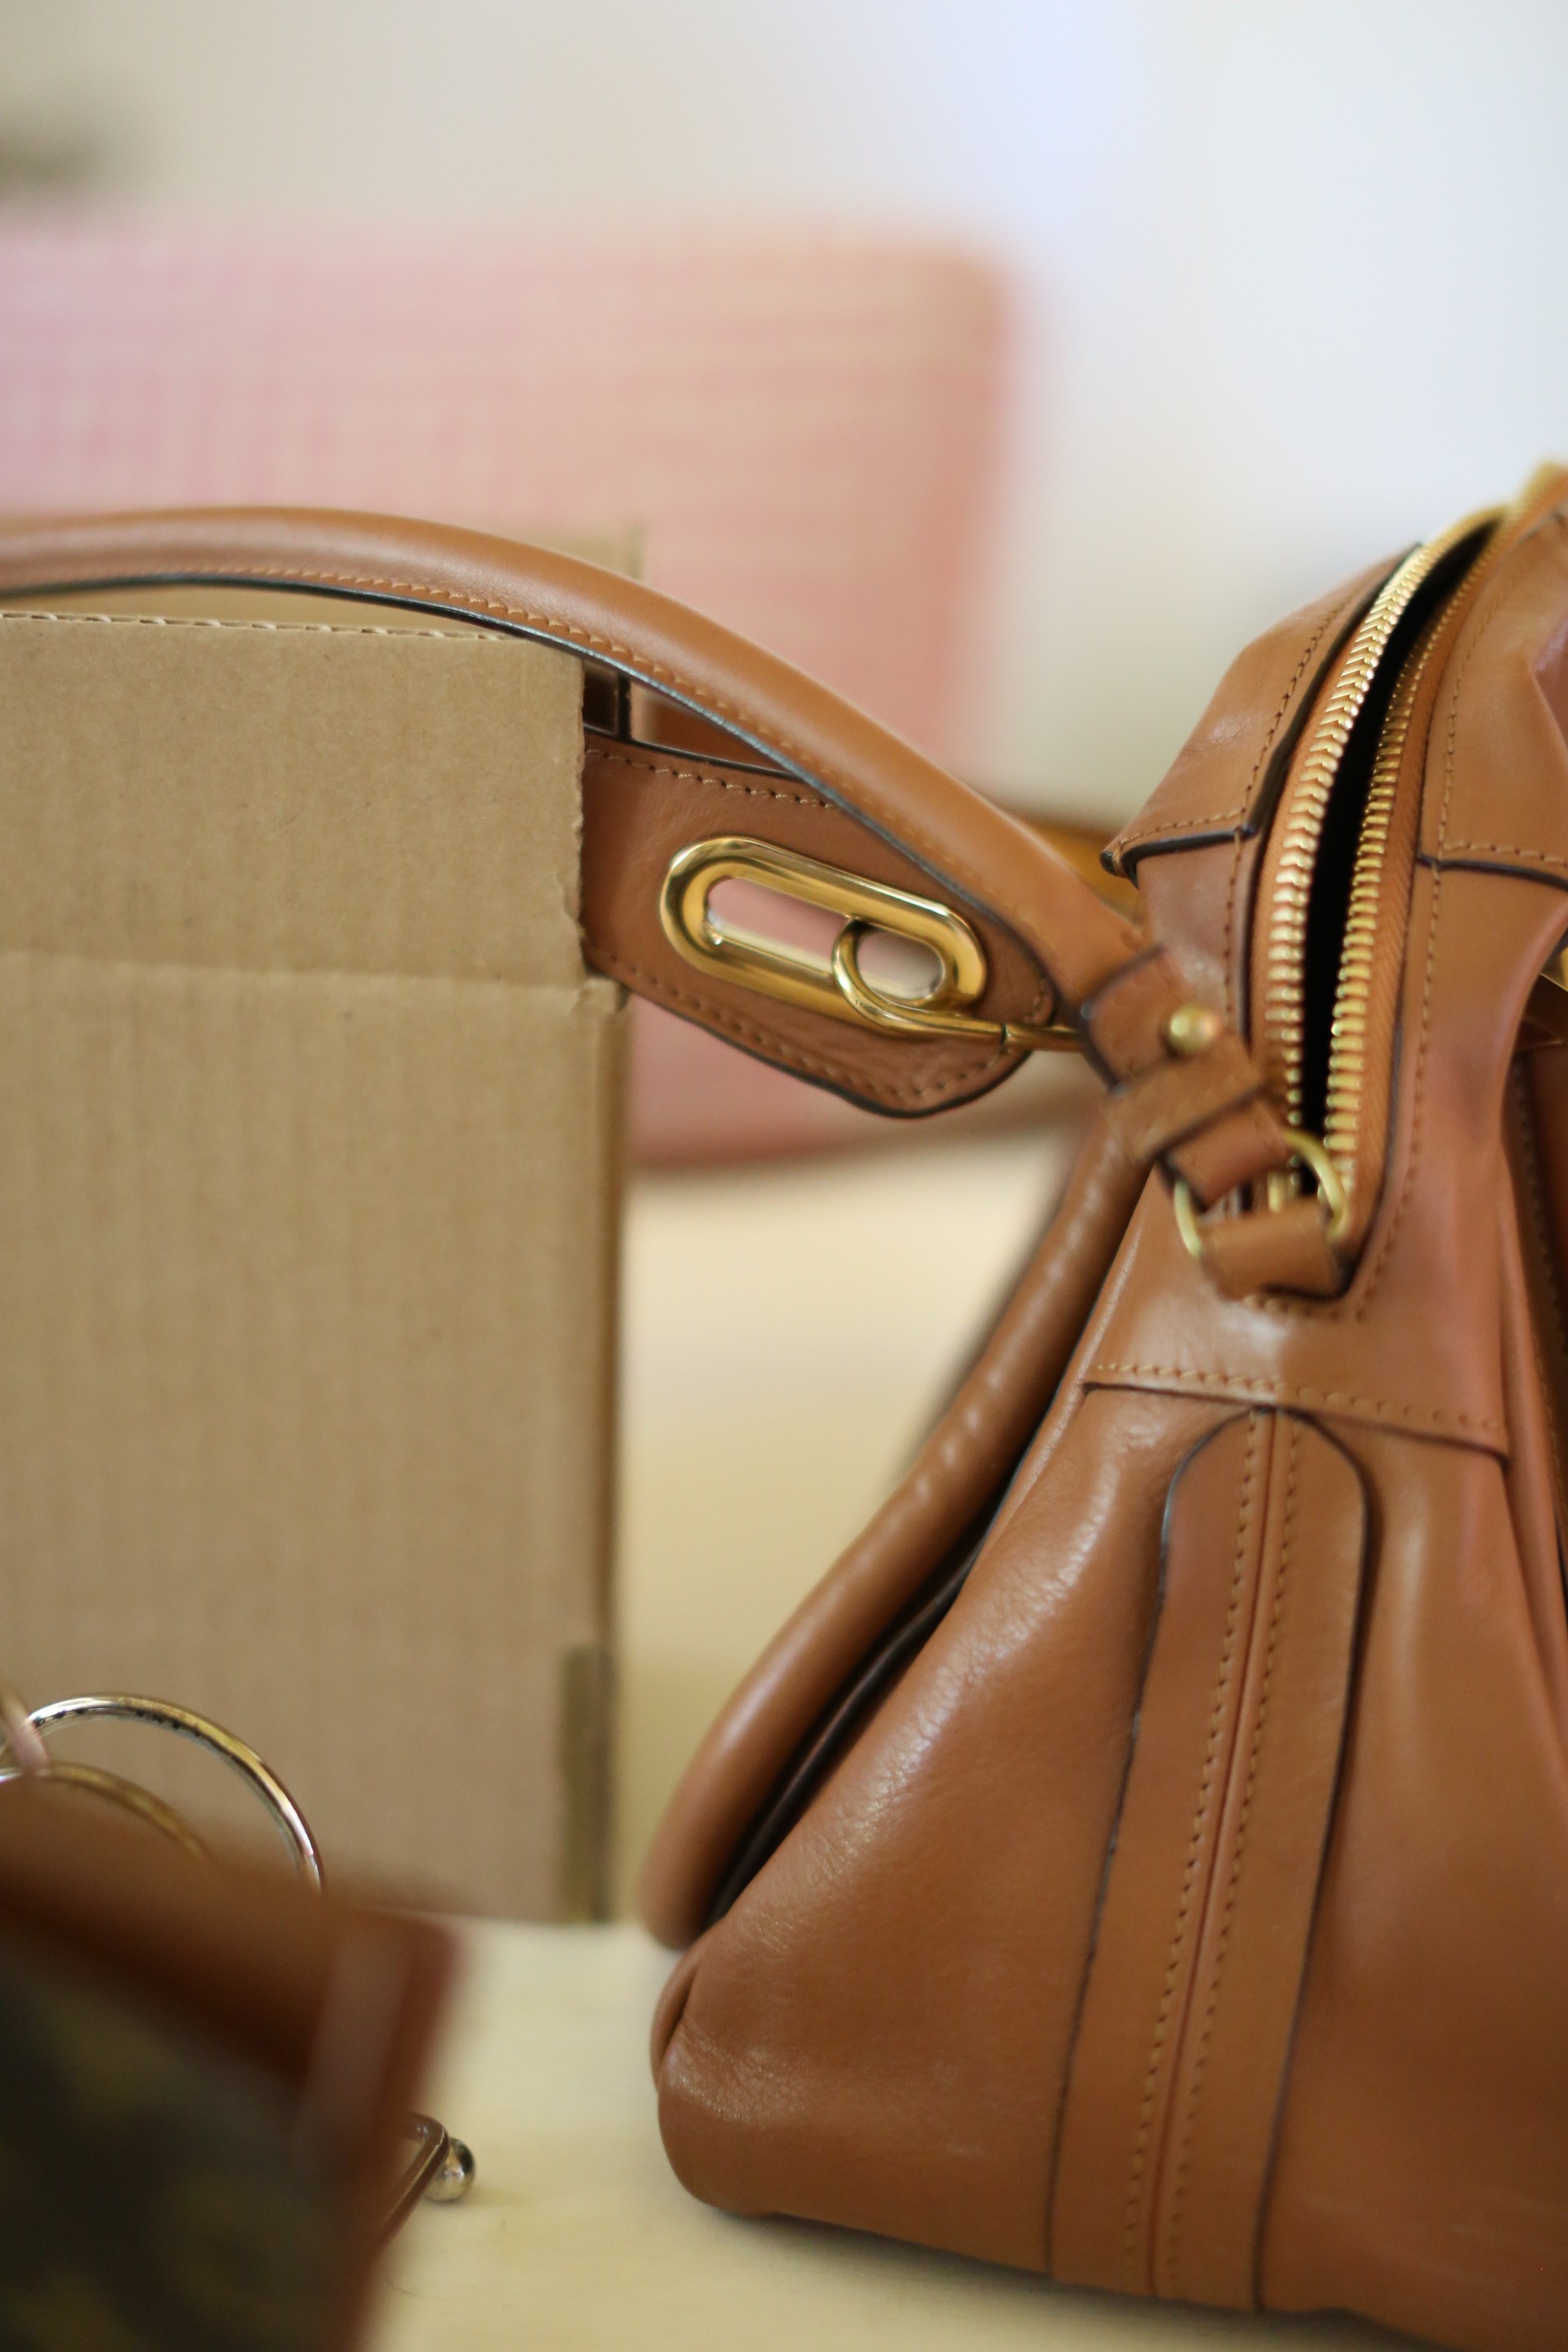 Repairing a leather strap on a handbag | Diana Elizabeth